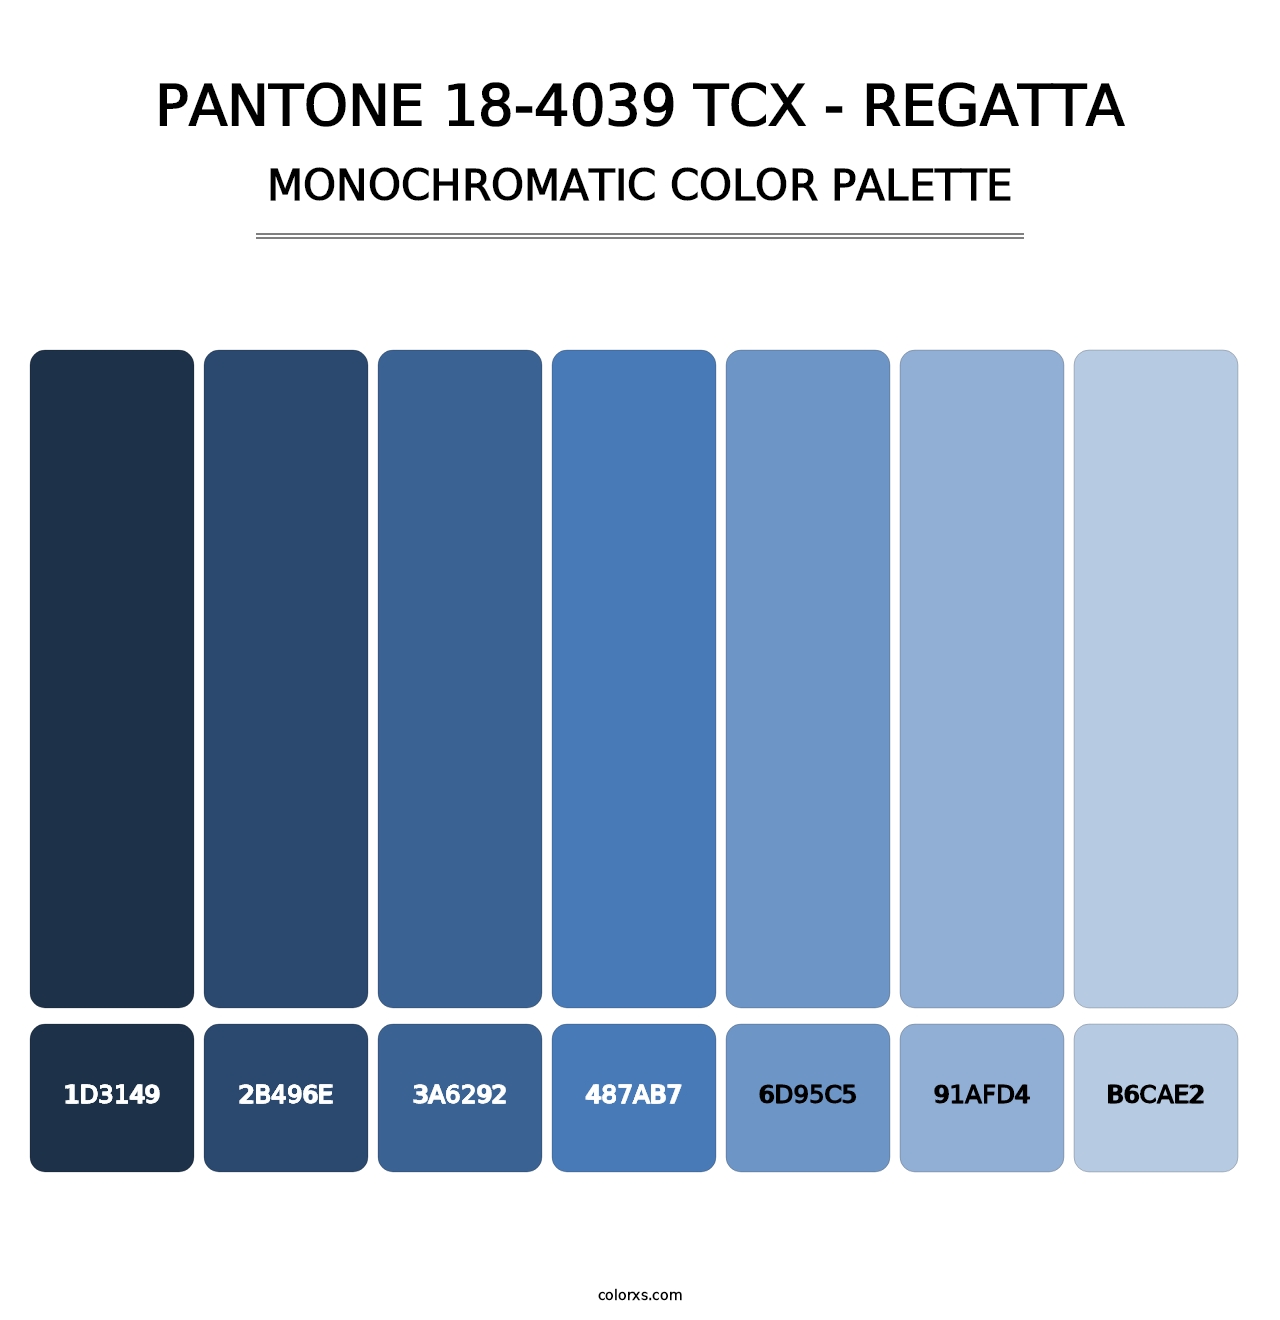 PANTONE 18-4039 TCX - Regatta - Monochromatic Color Palette